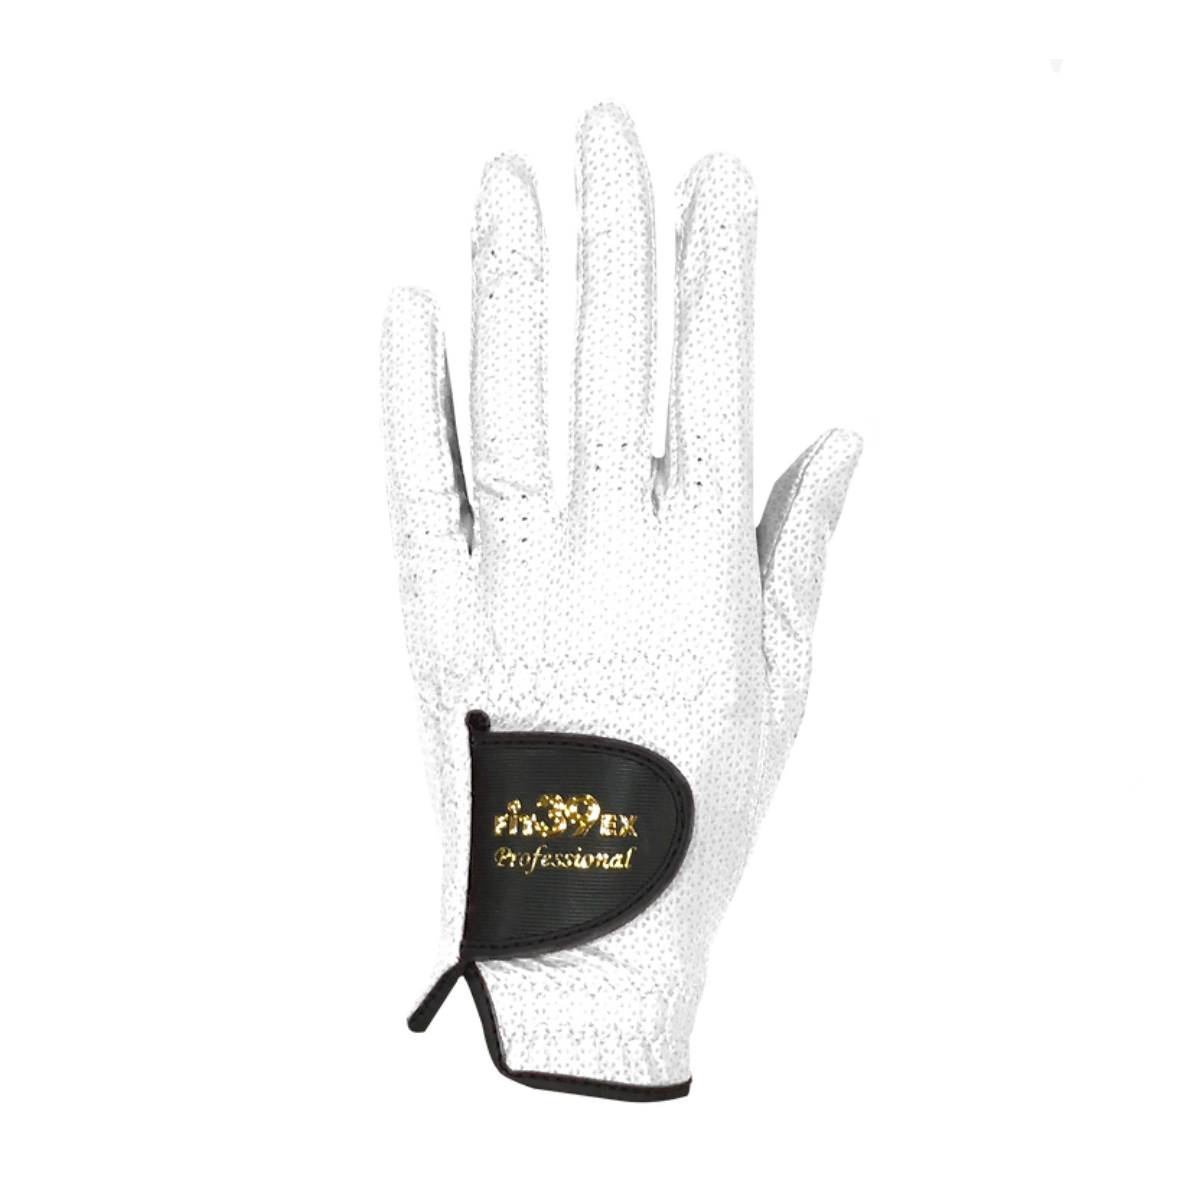 Fit39 Ex Professional Golf Glove - Right Hand Glove